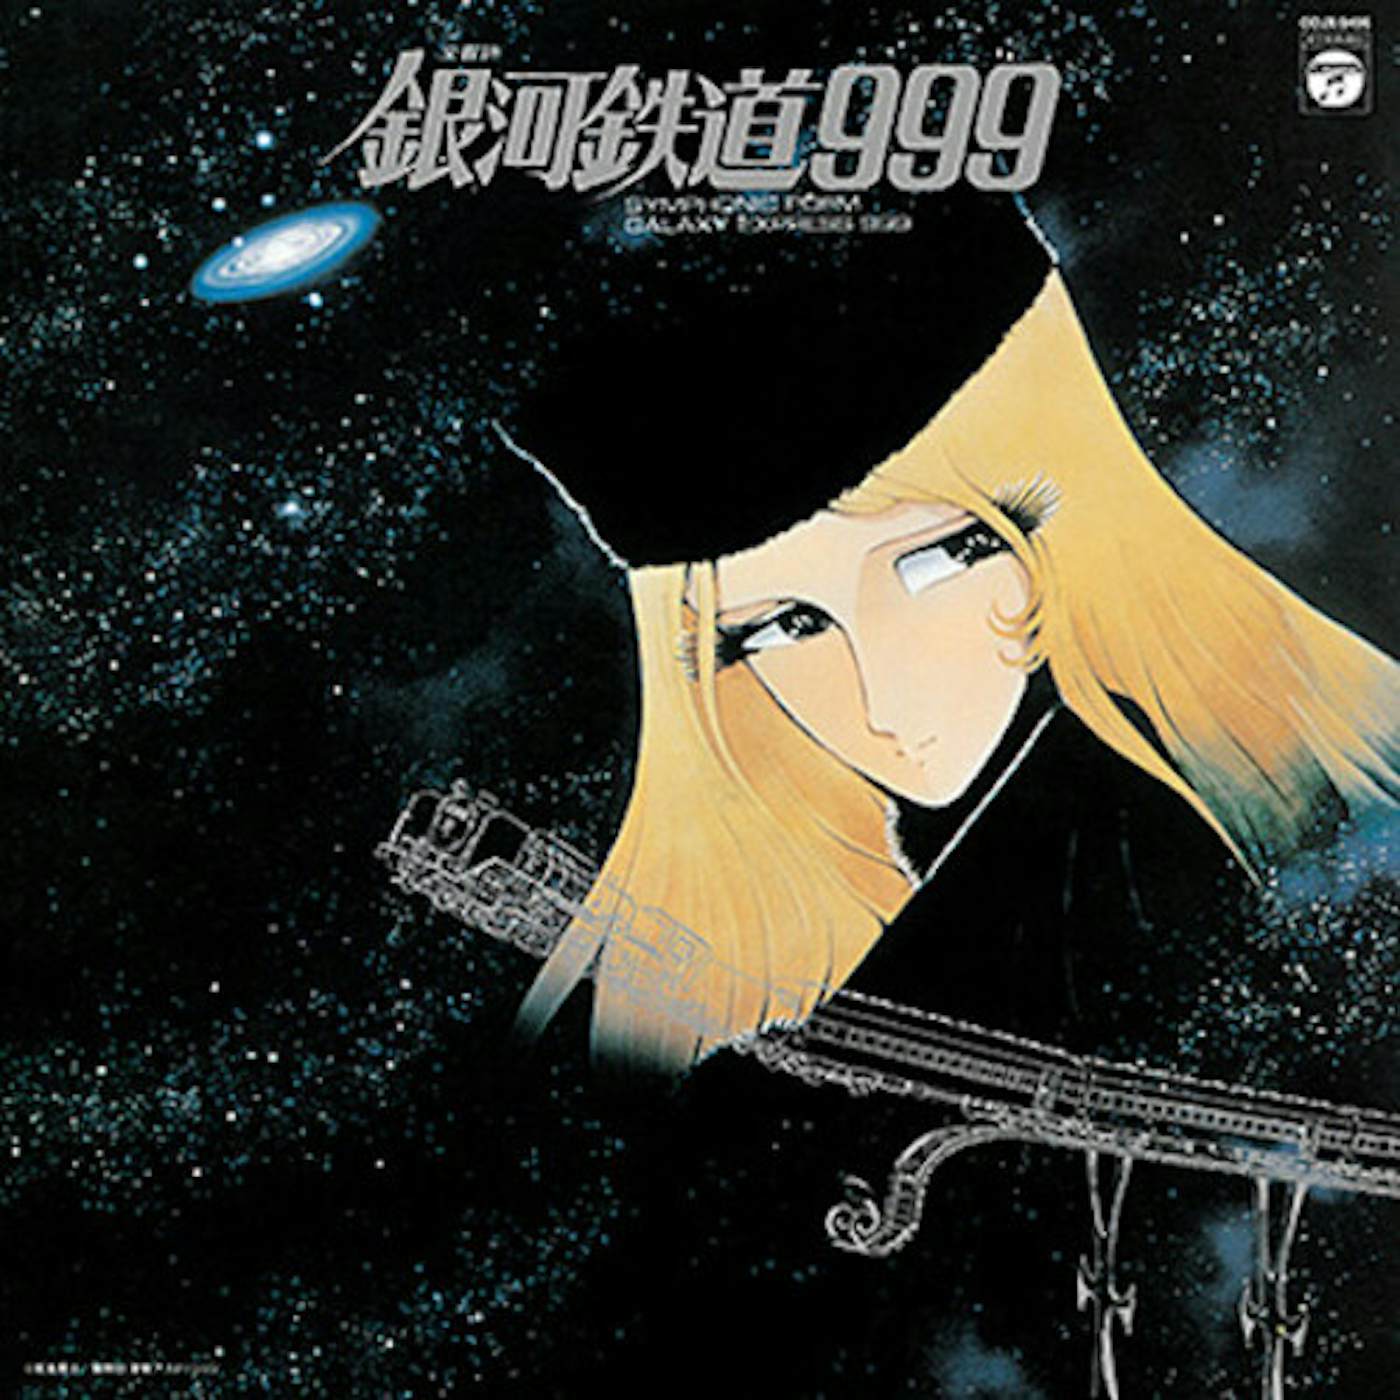 Nozomi Aoki SYMPHONIC POEM GALAXY EXPRESS 999 - Original Soundtrack Vinyl Record